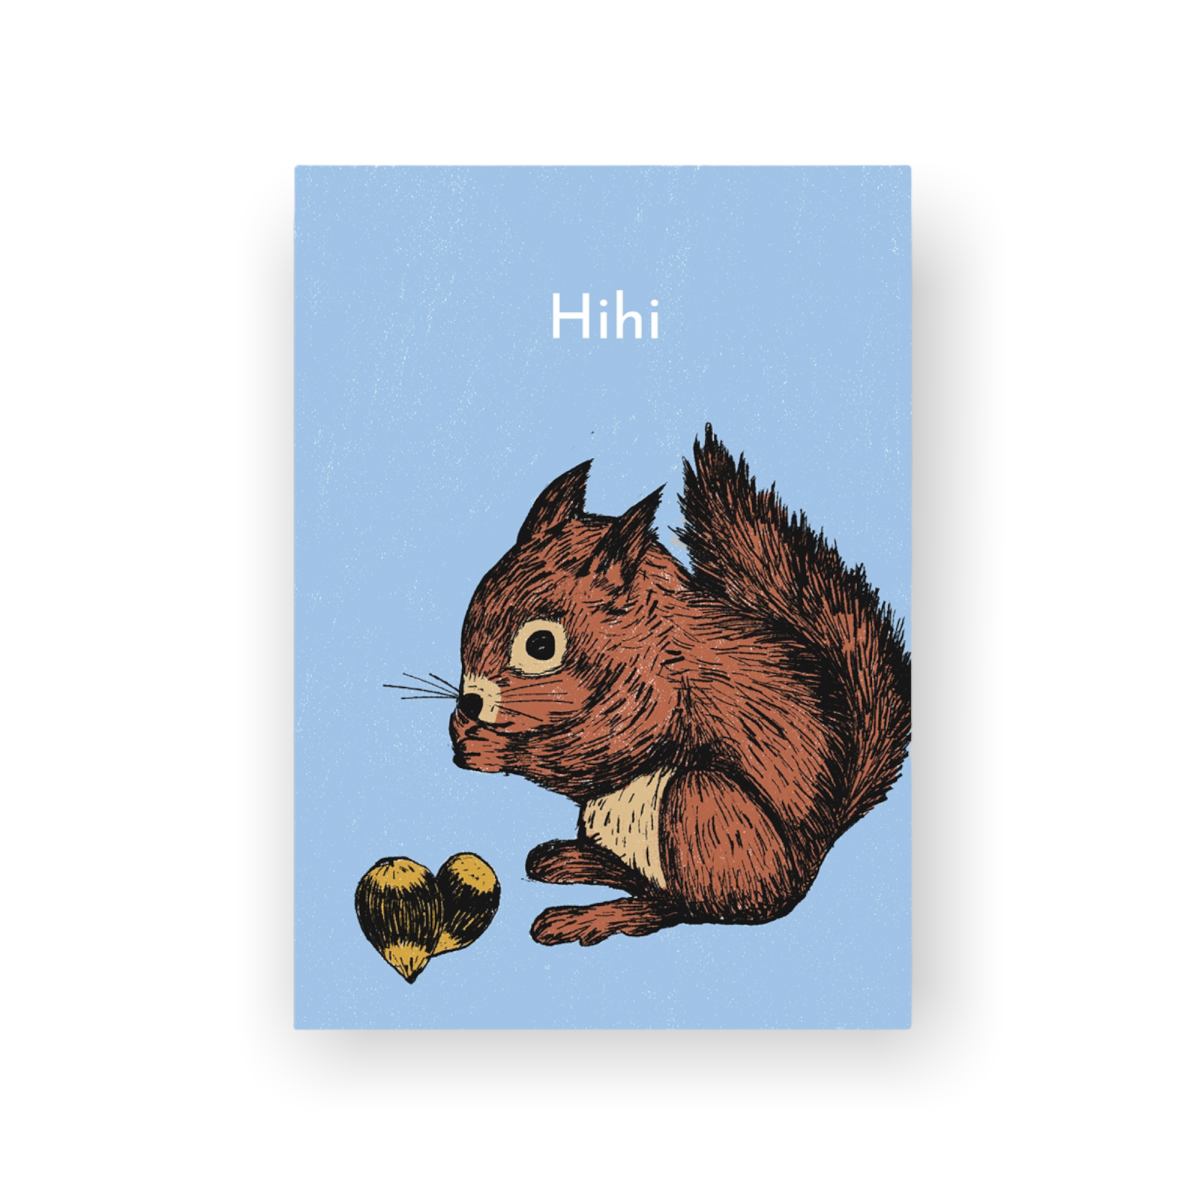 Postcard squirrel